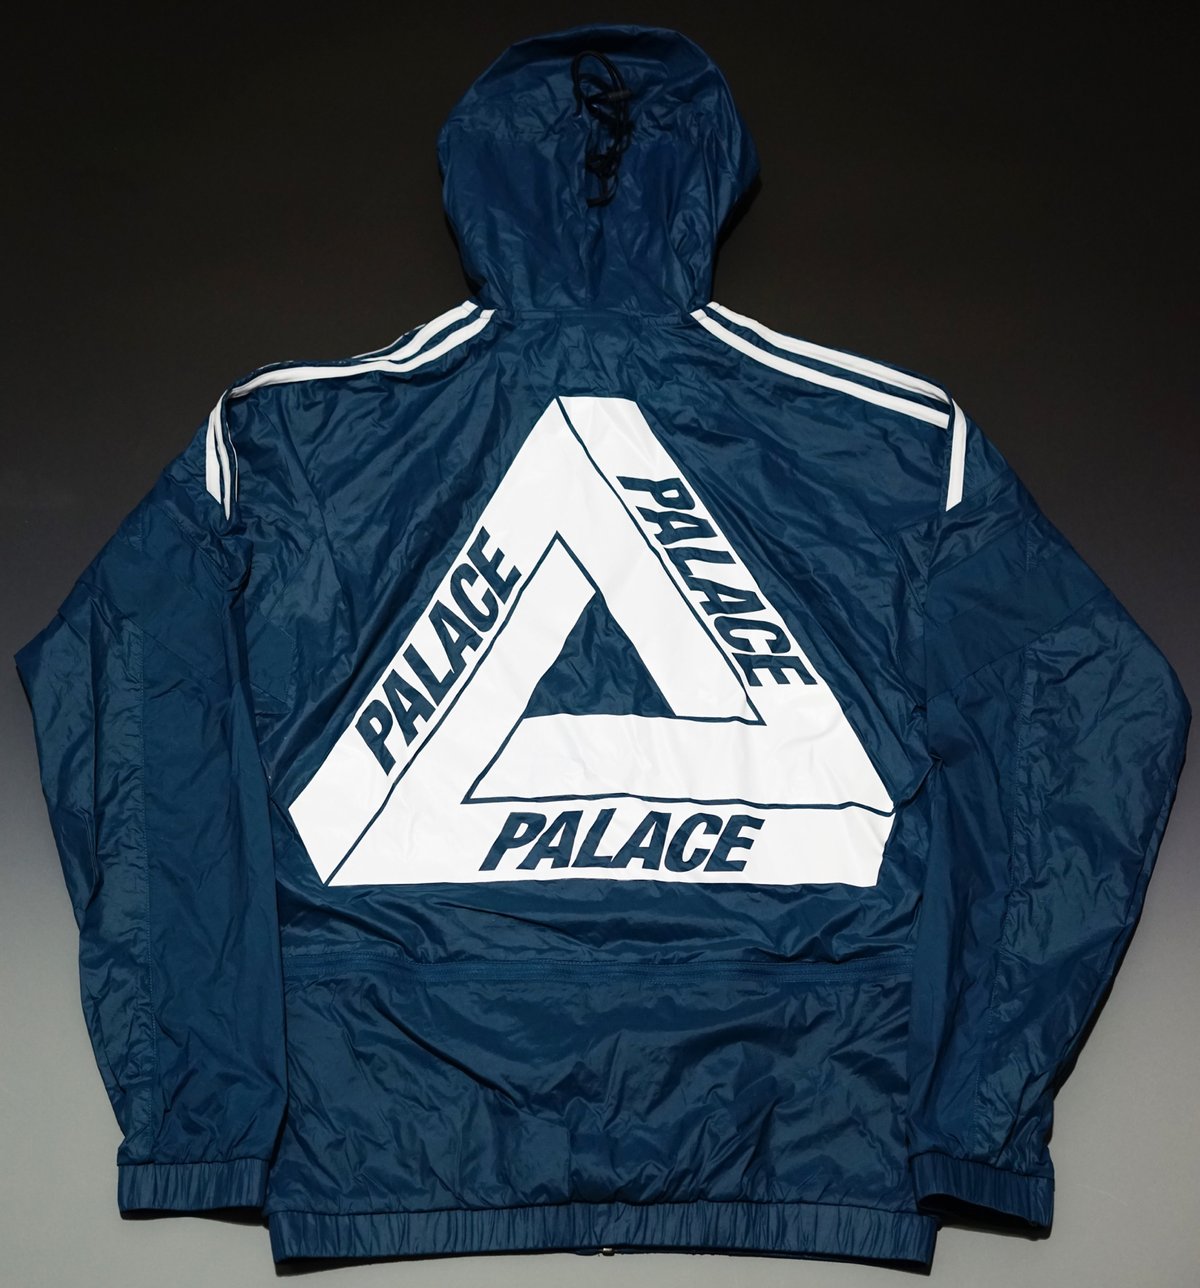 x Palace Jacket | Supreme Addict